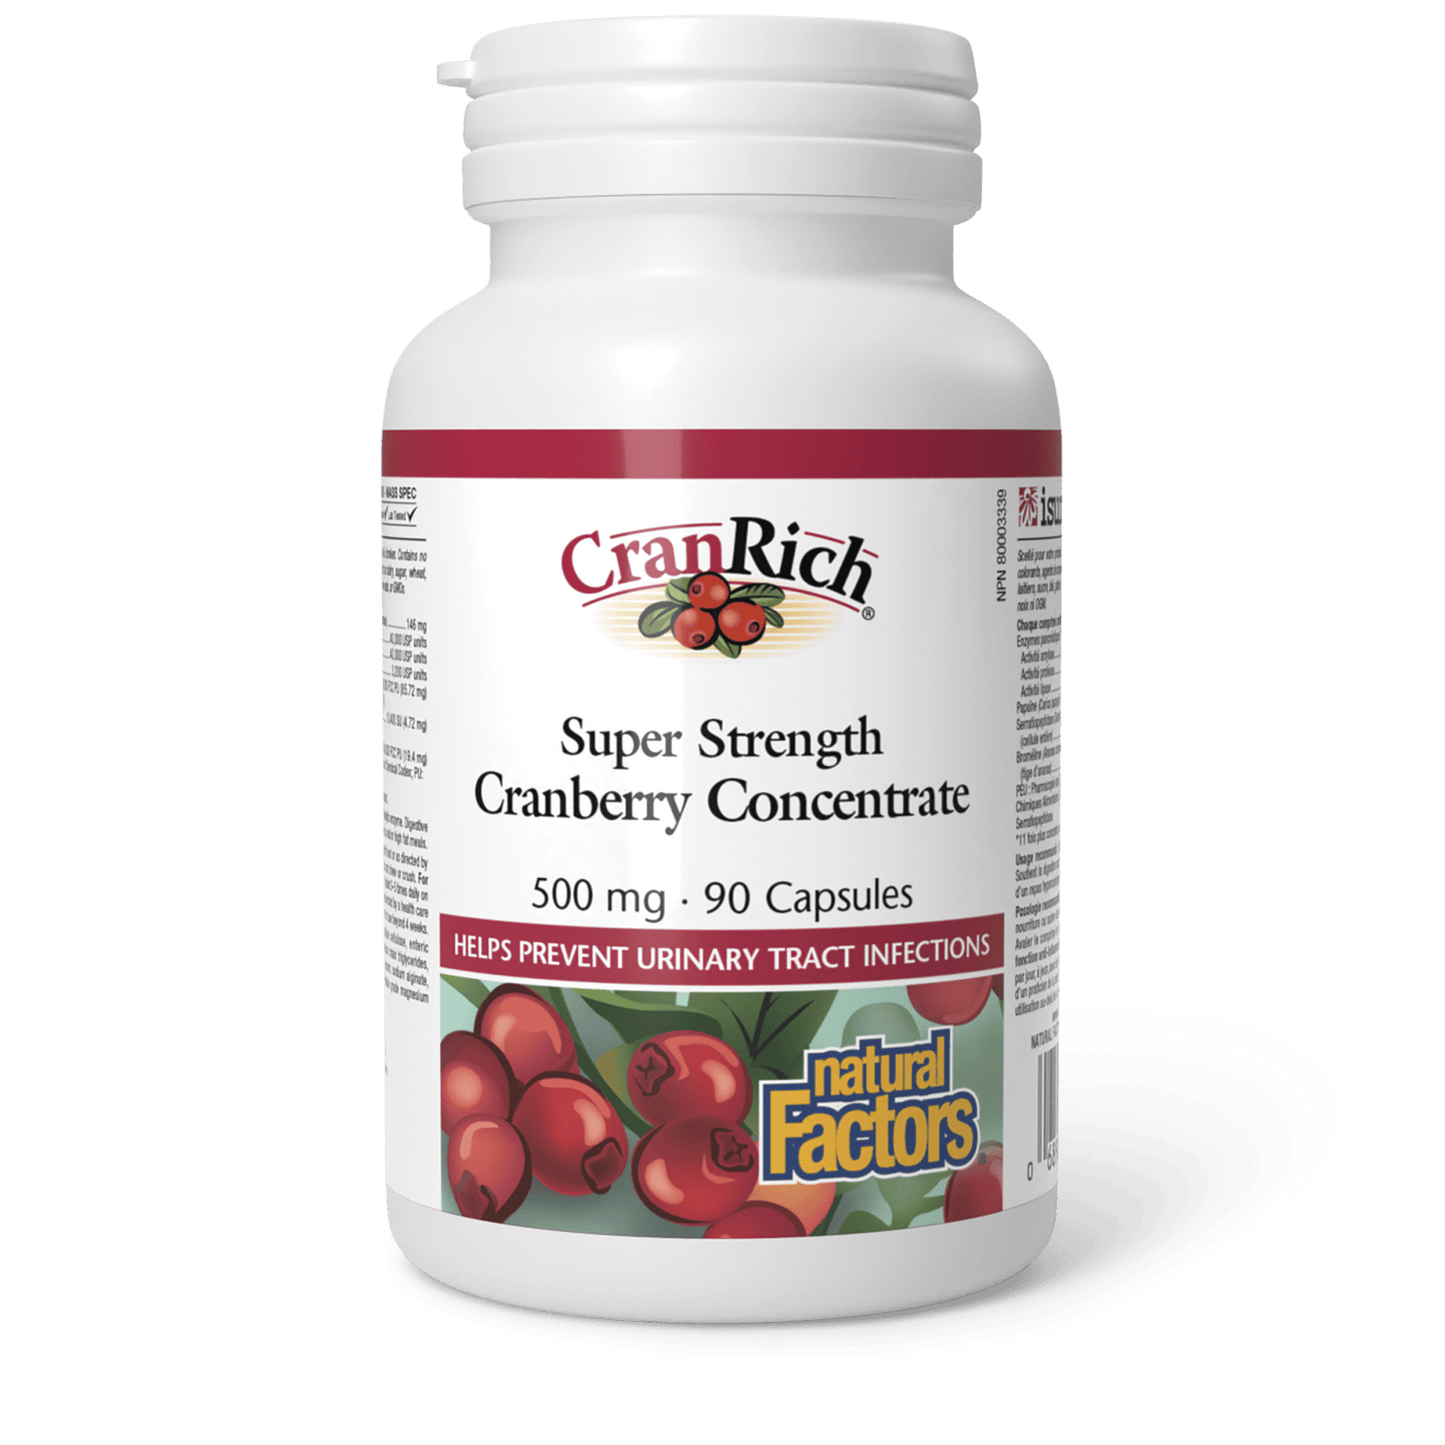 CranRich Super Strength Cranberry Concentrate 500 mg, Natural Factors|v|image|4512